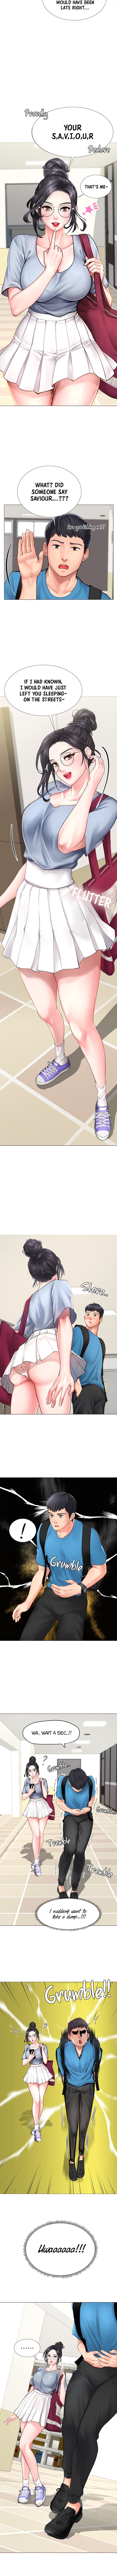 Should I Study at Noryangjin? - Chapter 6 Page 4